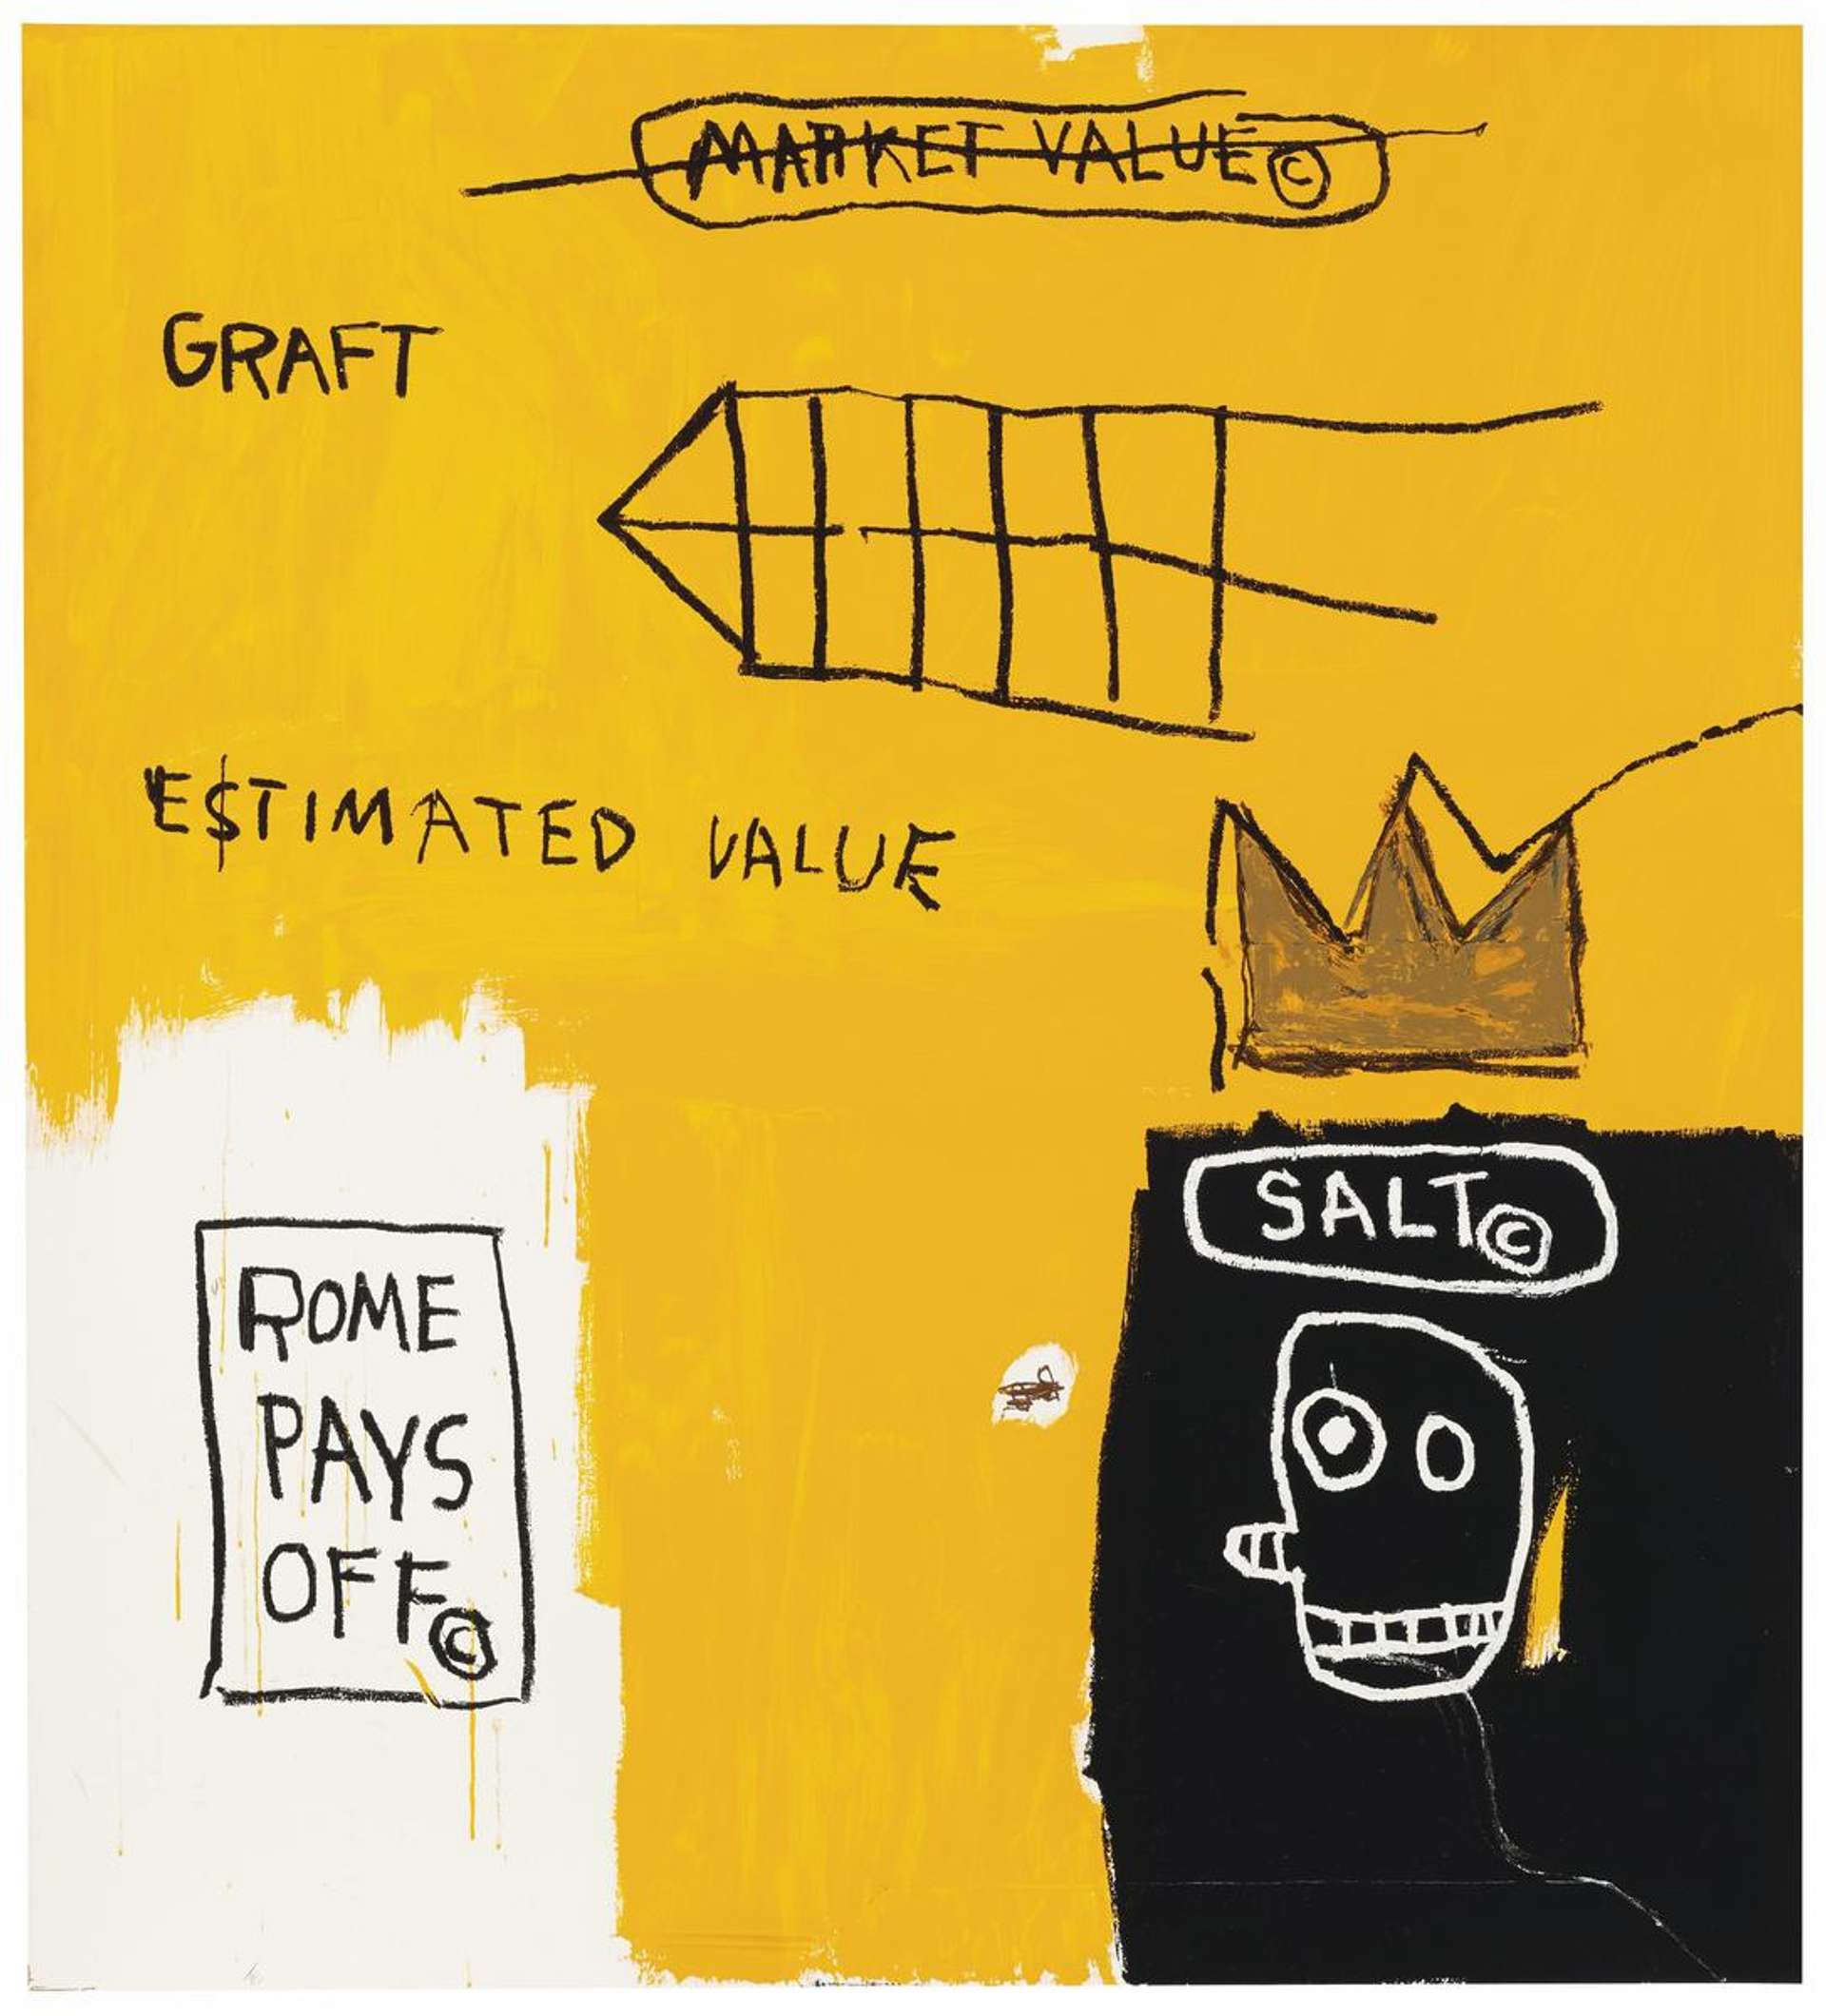 Basquiat × Warhol. Painting four hands